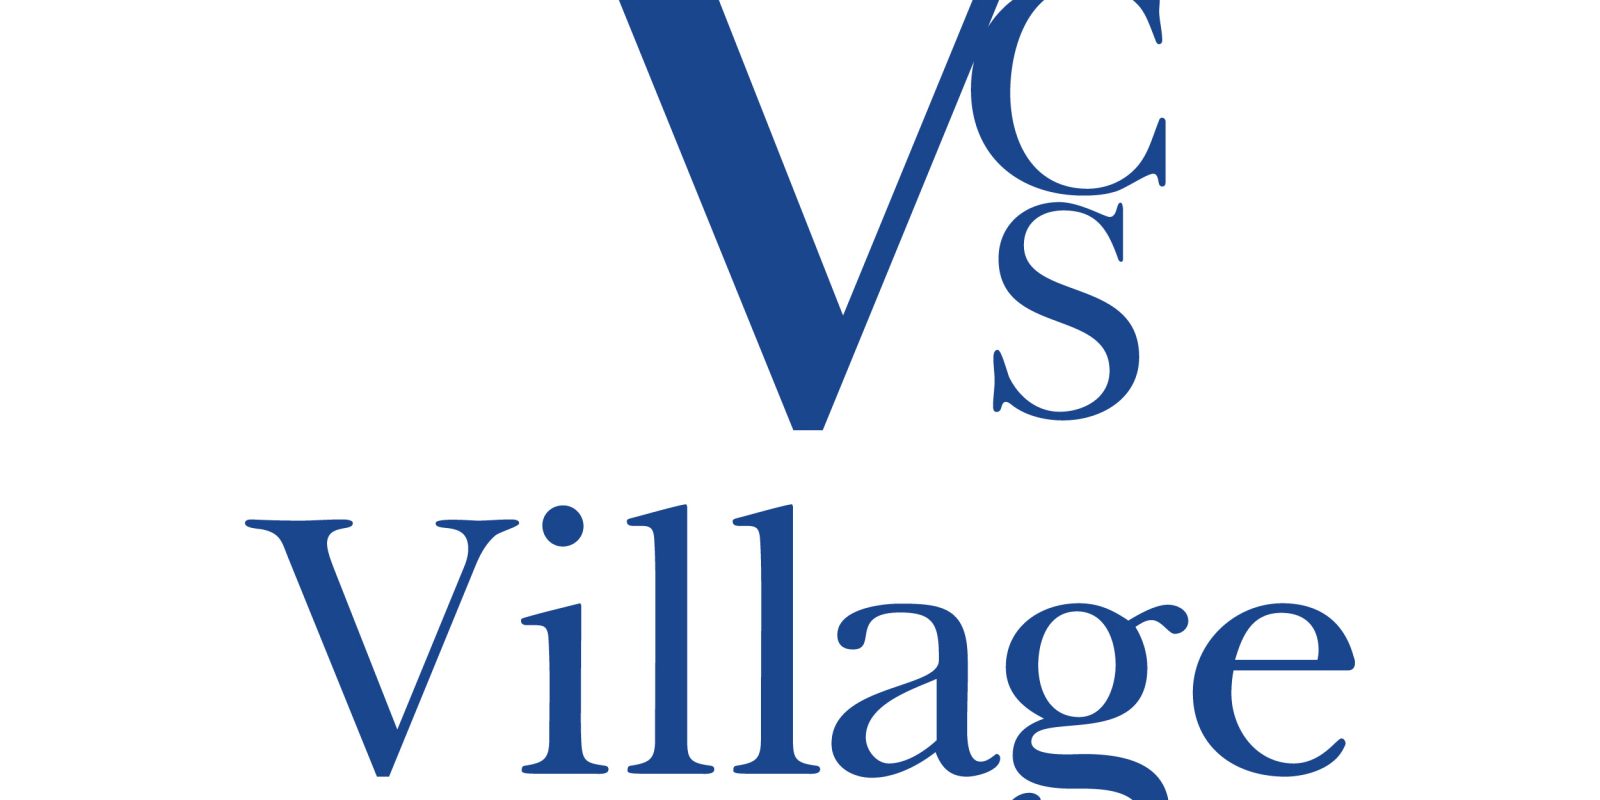 VIllage Community Services Logo